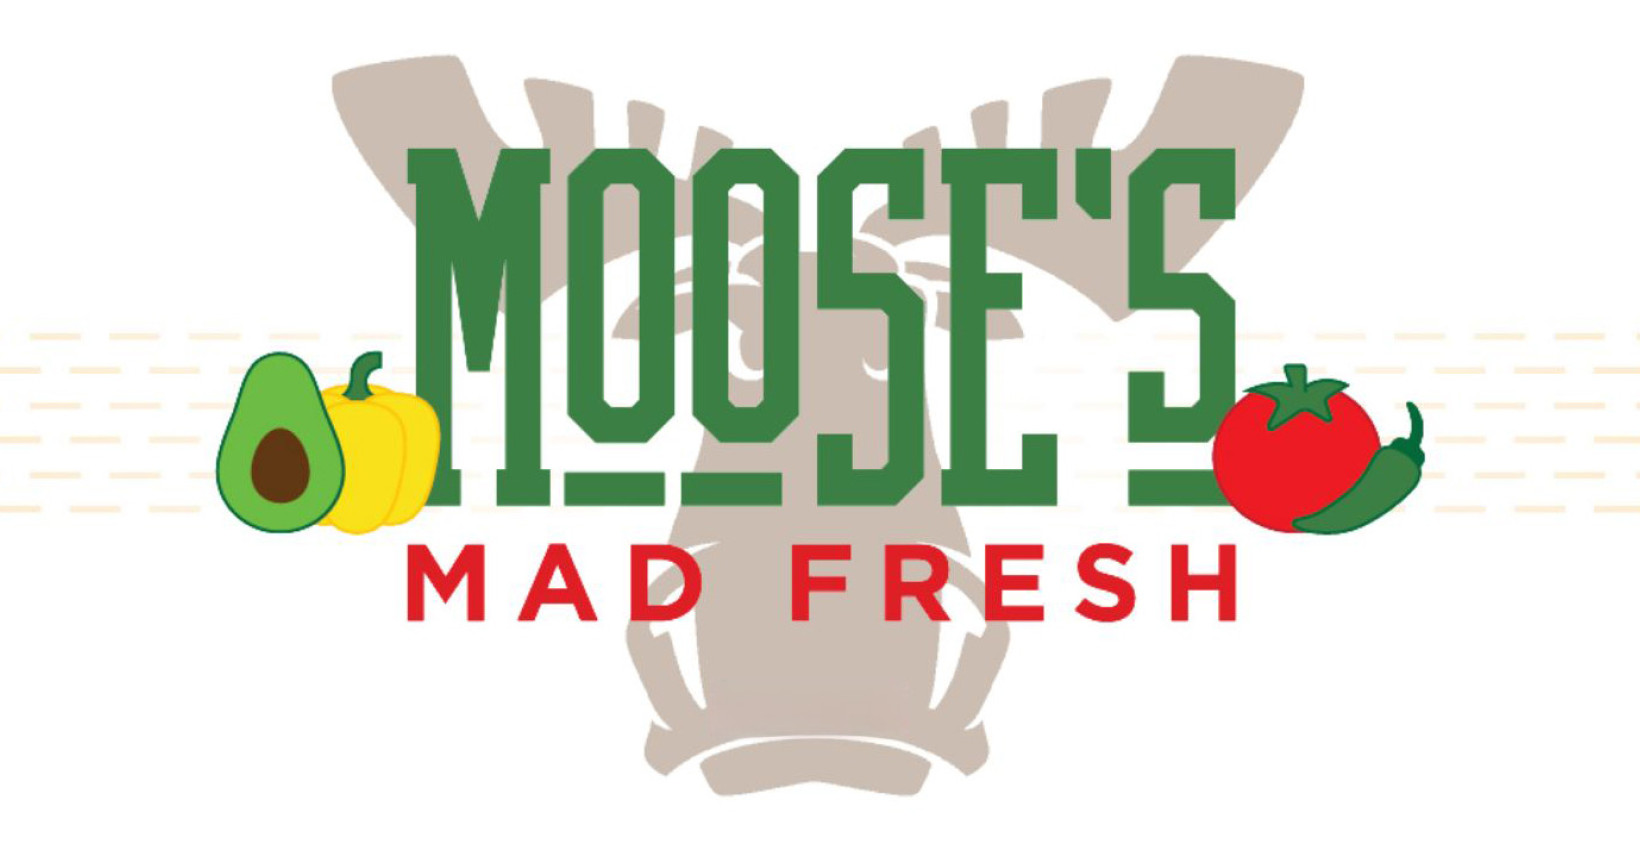 Moose's Mad Fresh logo